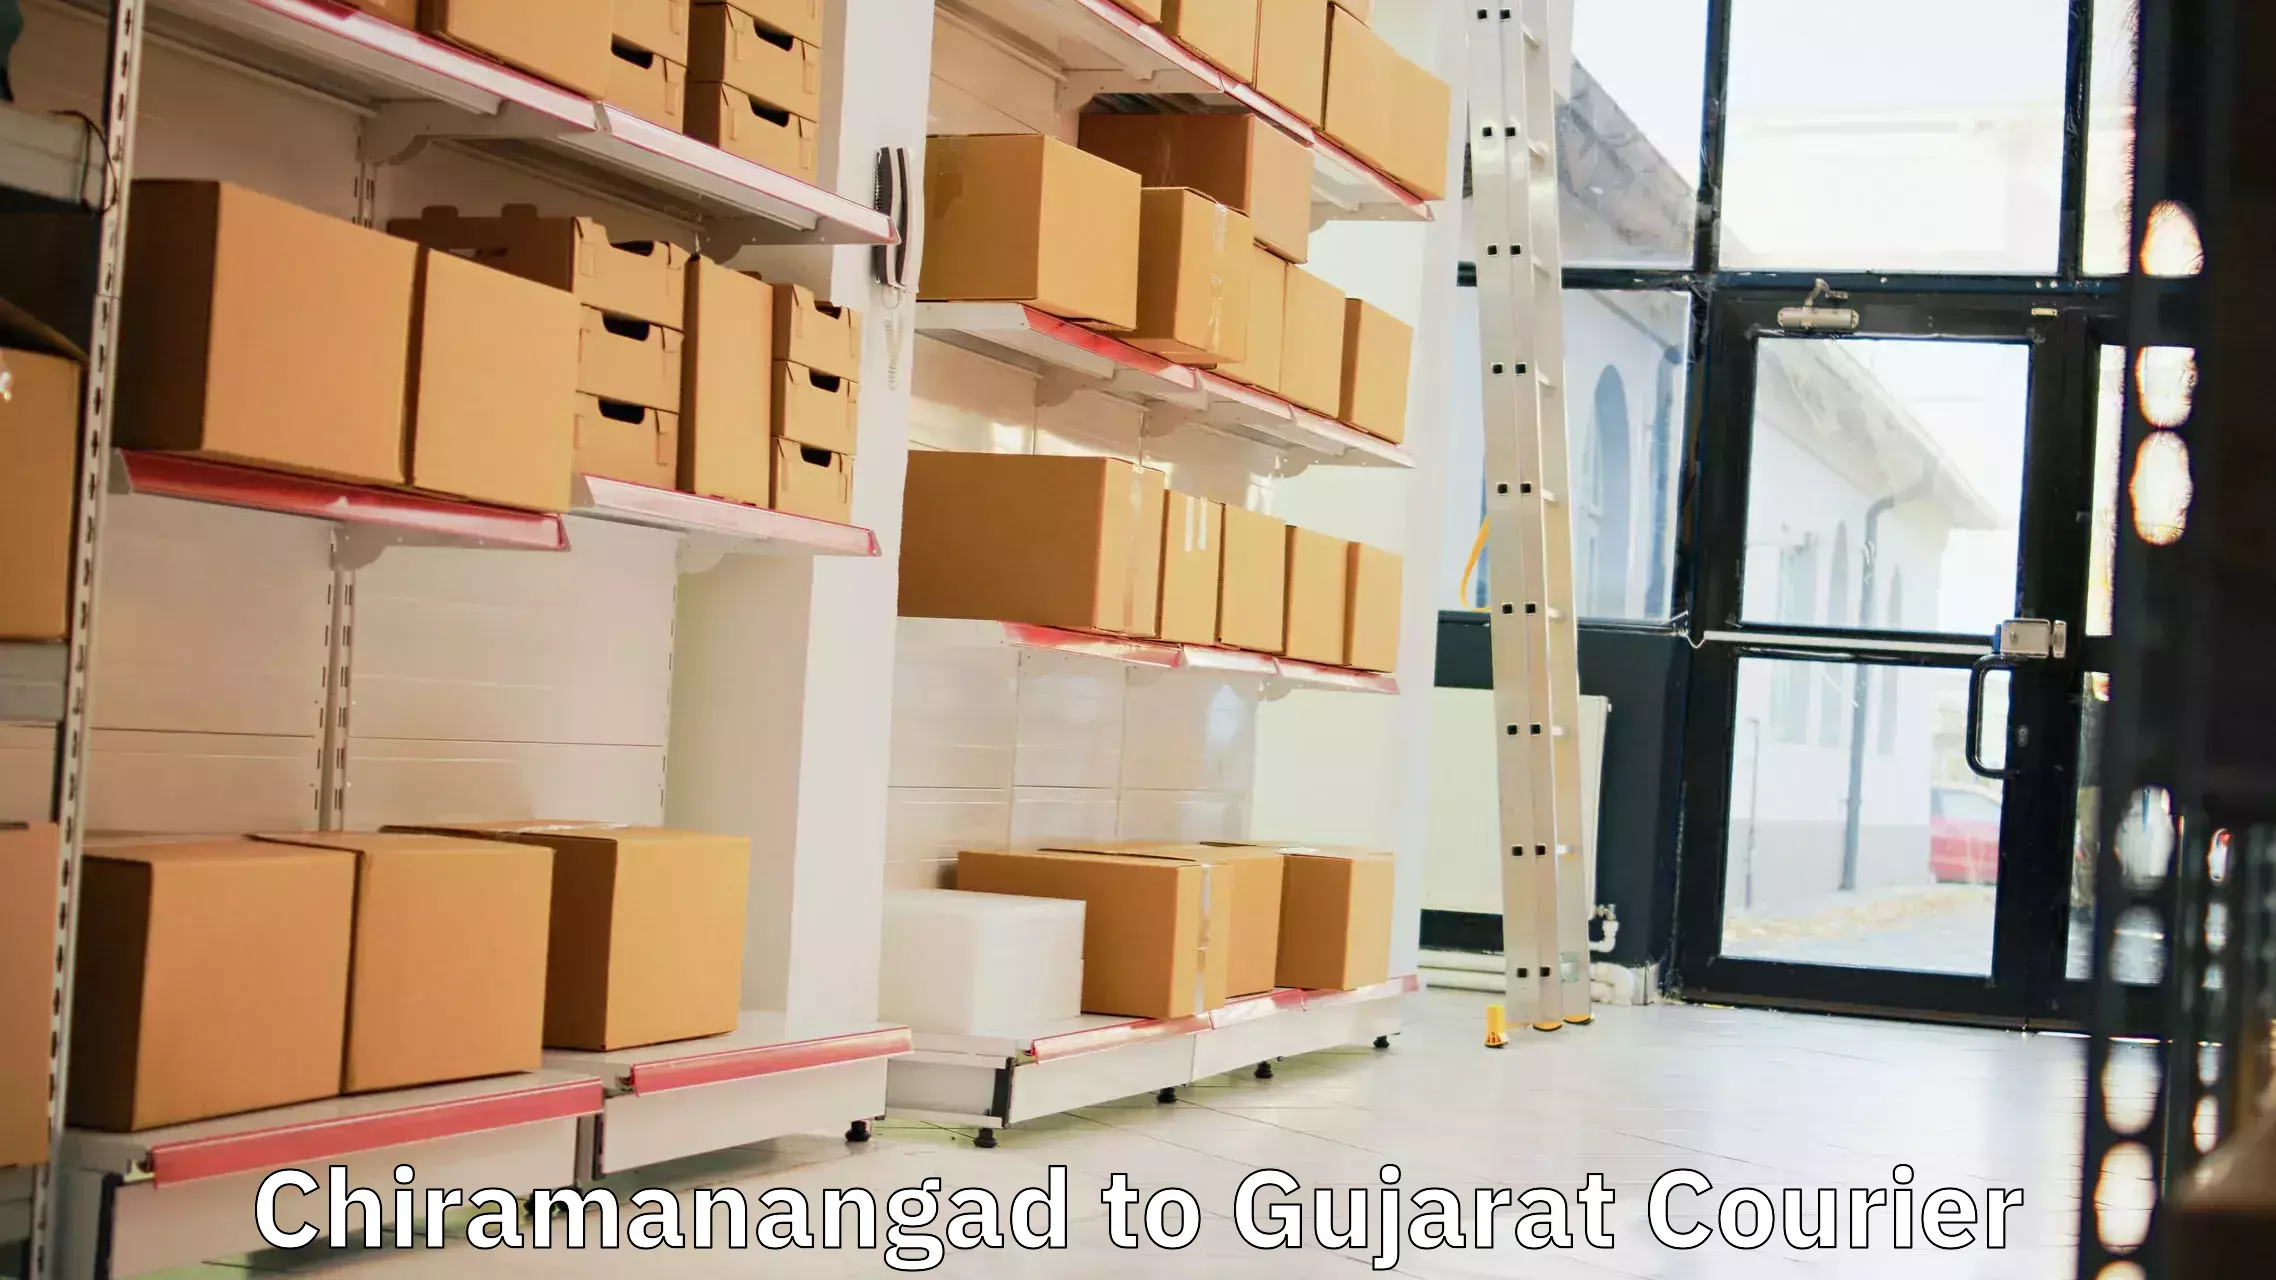 Courier service comparison Chiramanangad to Gujarat